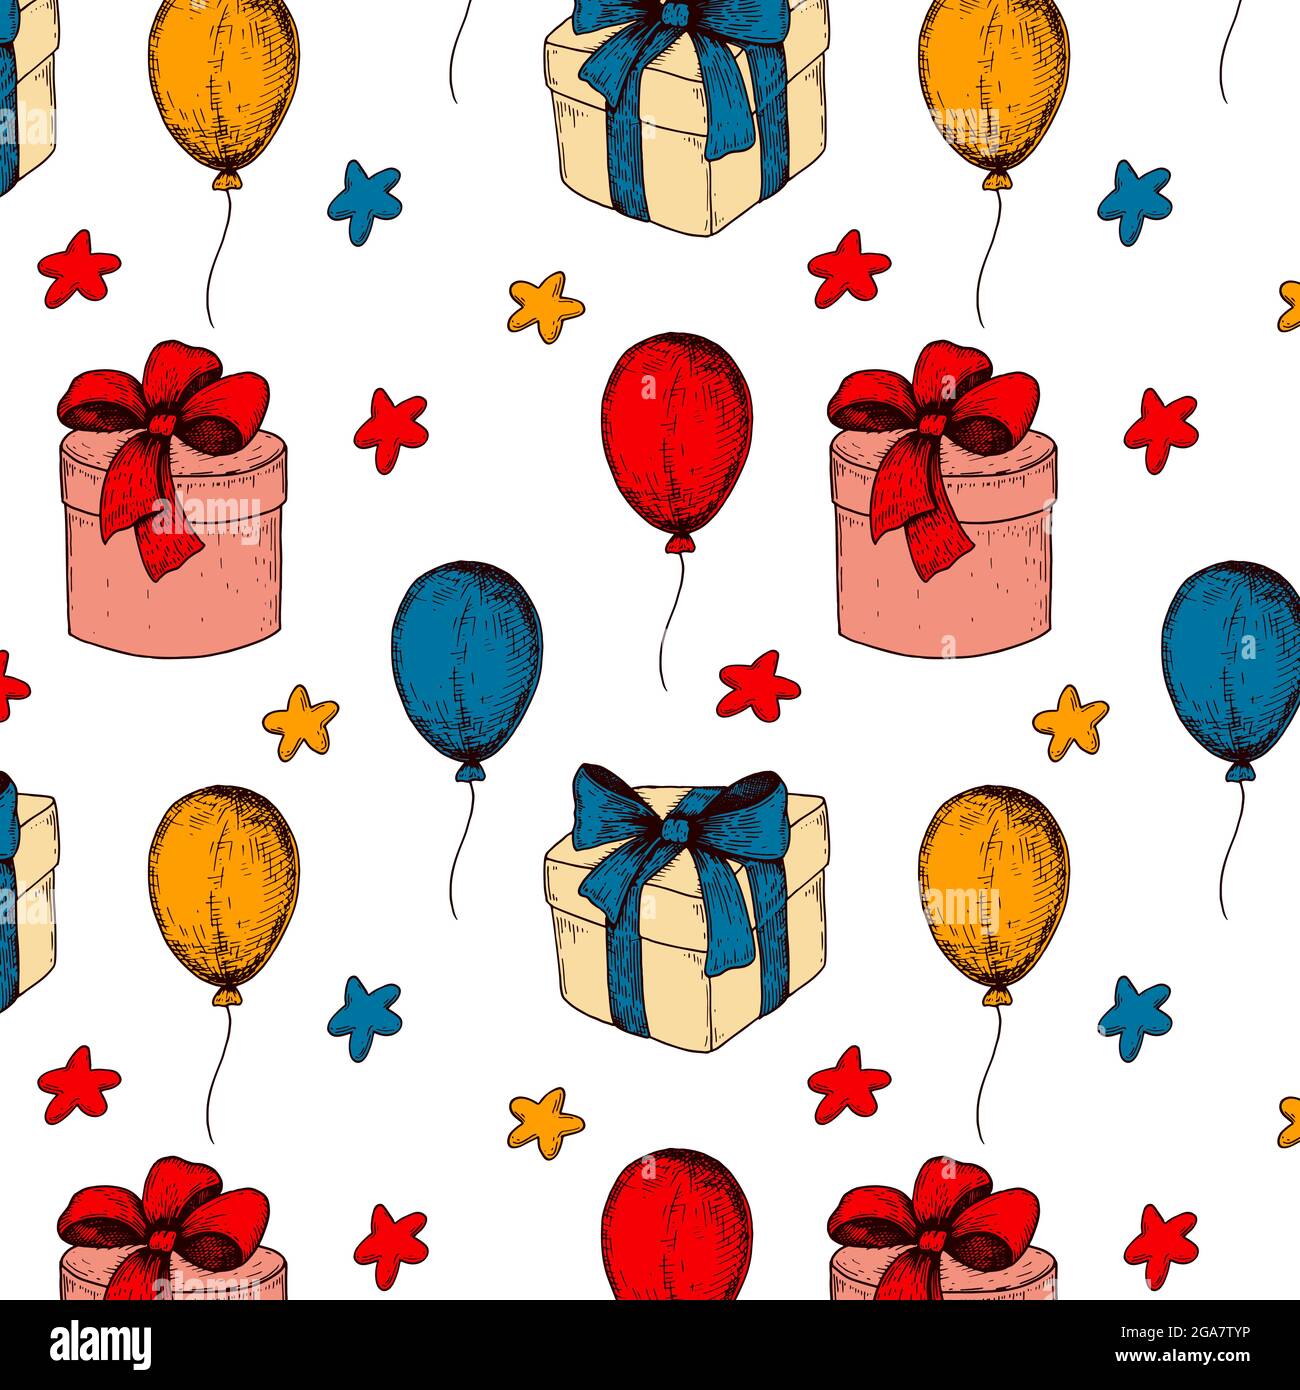 Handgezeichnetes nahtloses Happy Birthday-Muster. Vektorgrafik im farbigen Skizzenstil Stock Vektor